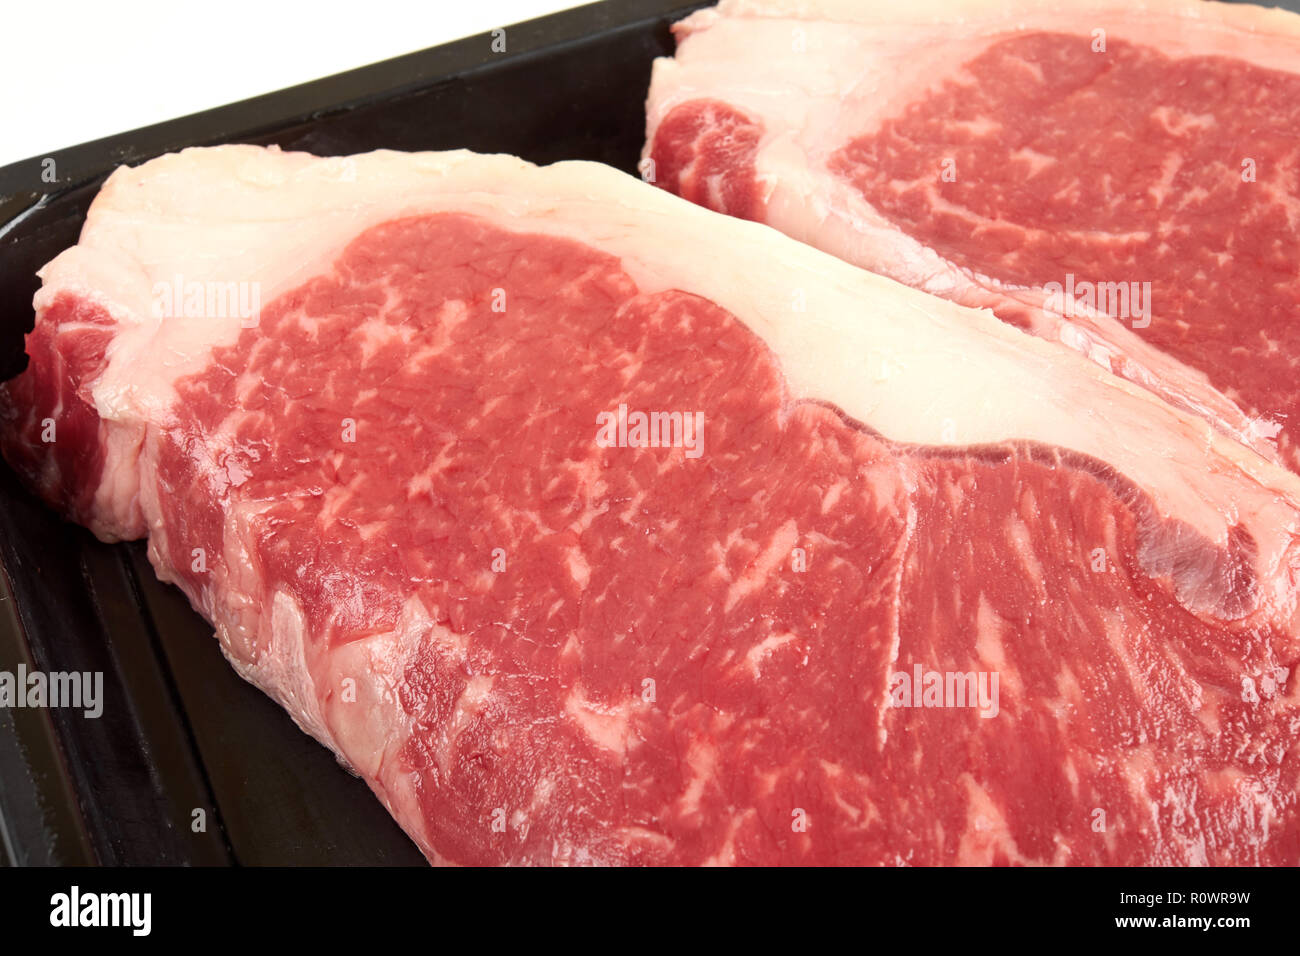 Raw sirloin beef steak in plastic packaging tray. Stock Photo